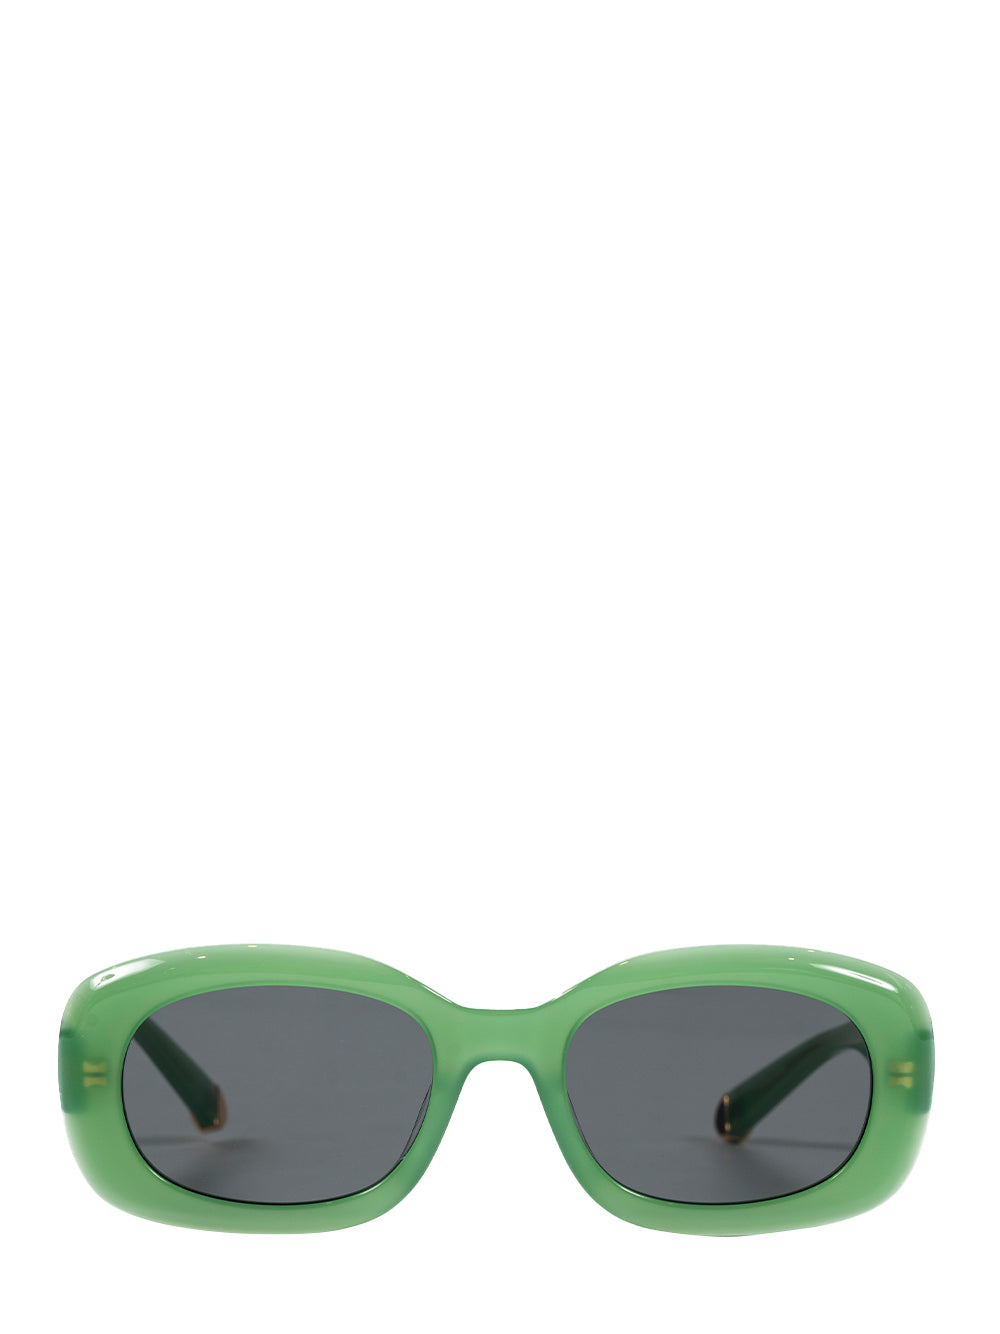 Sc40080i Acetate Sunglasses (Shiny Light Green/Green)